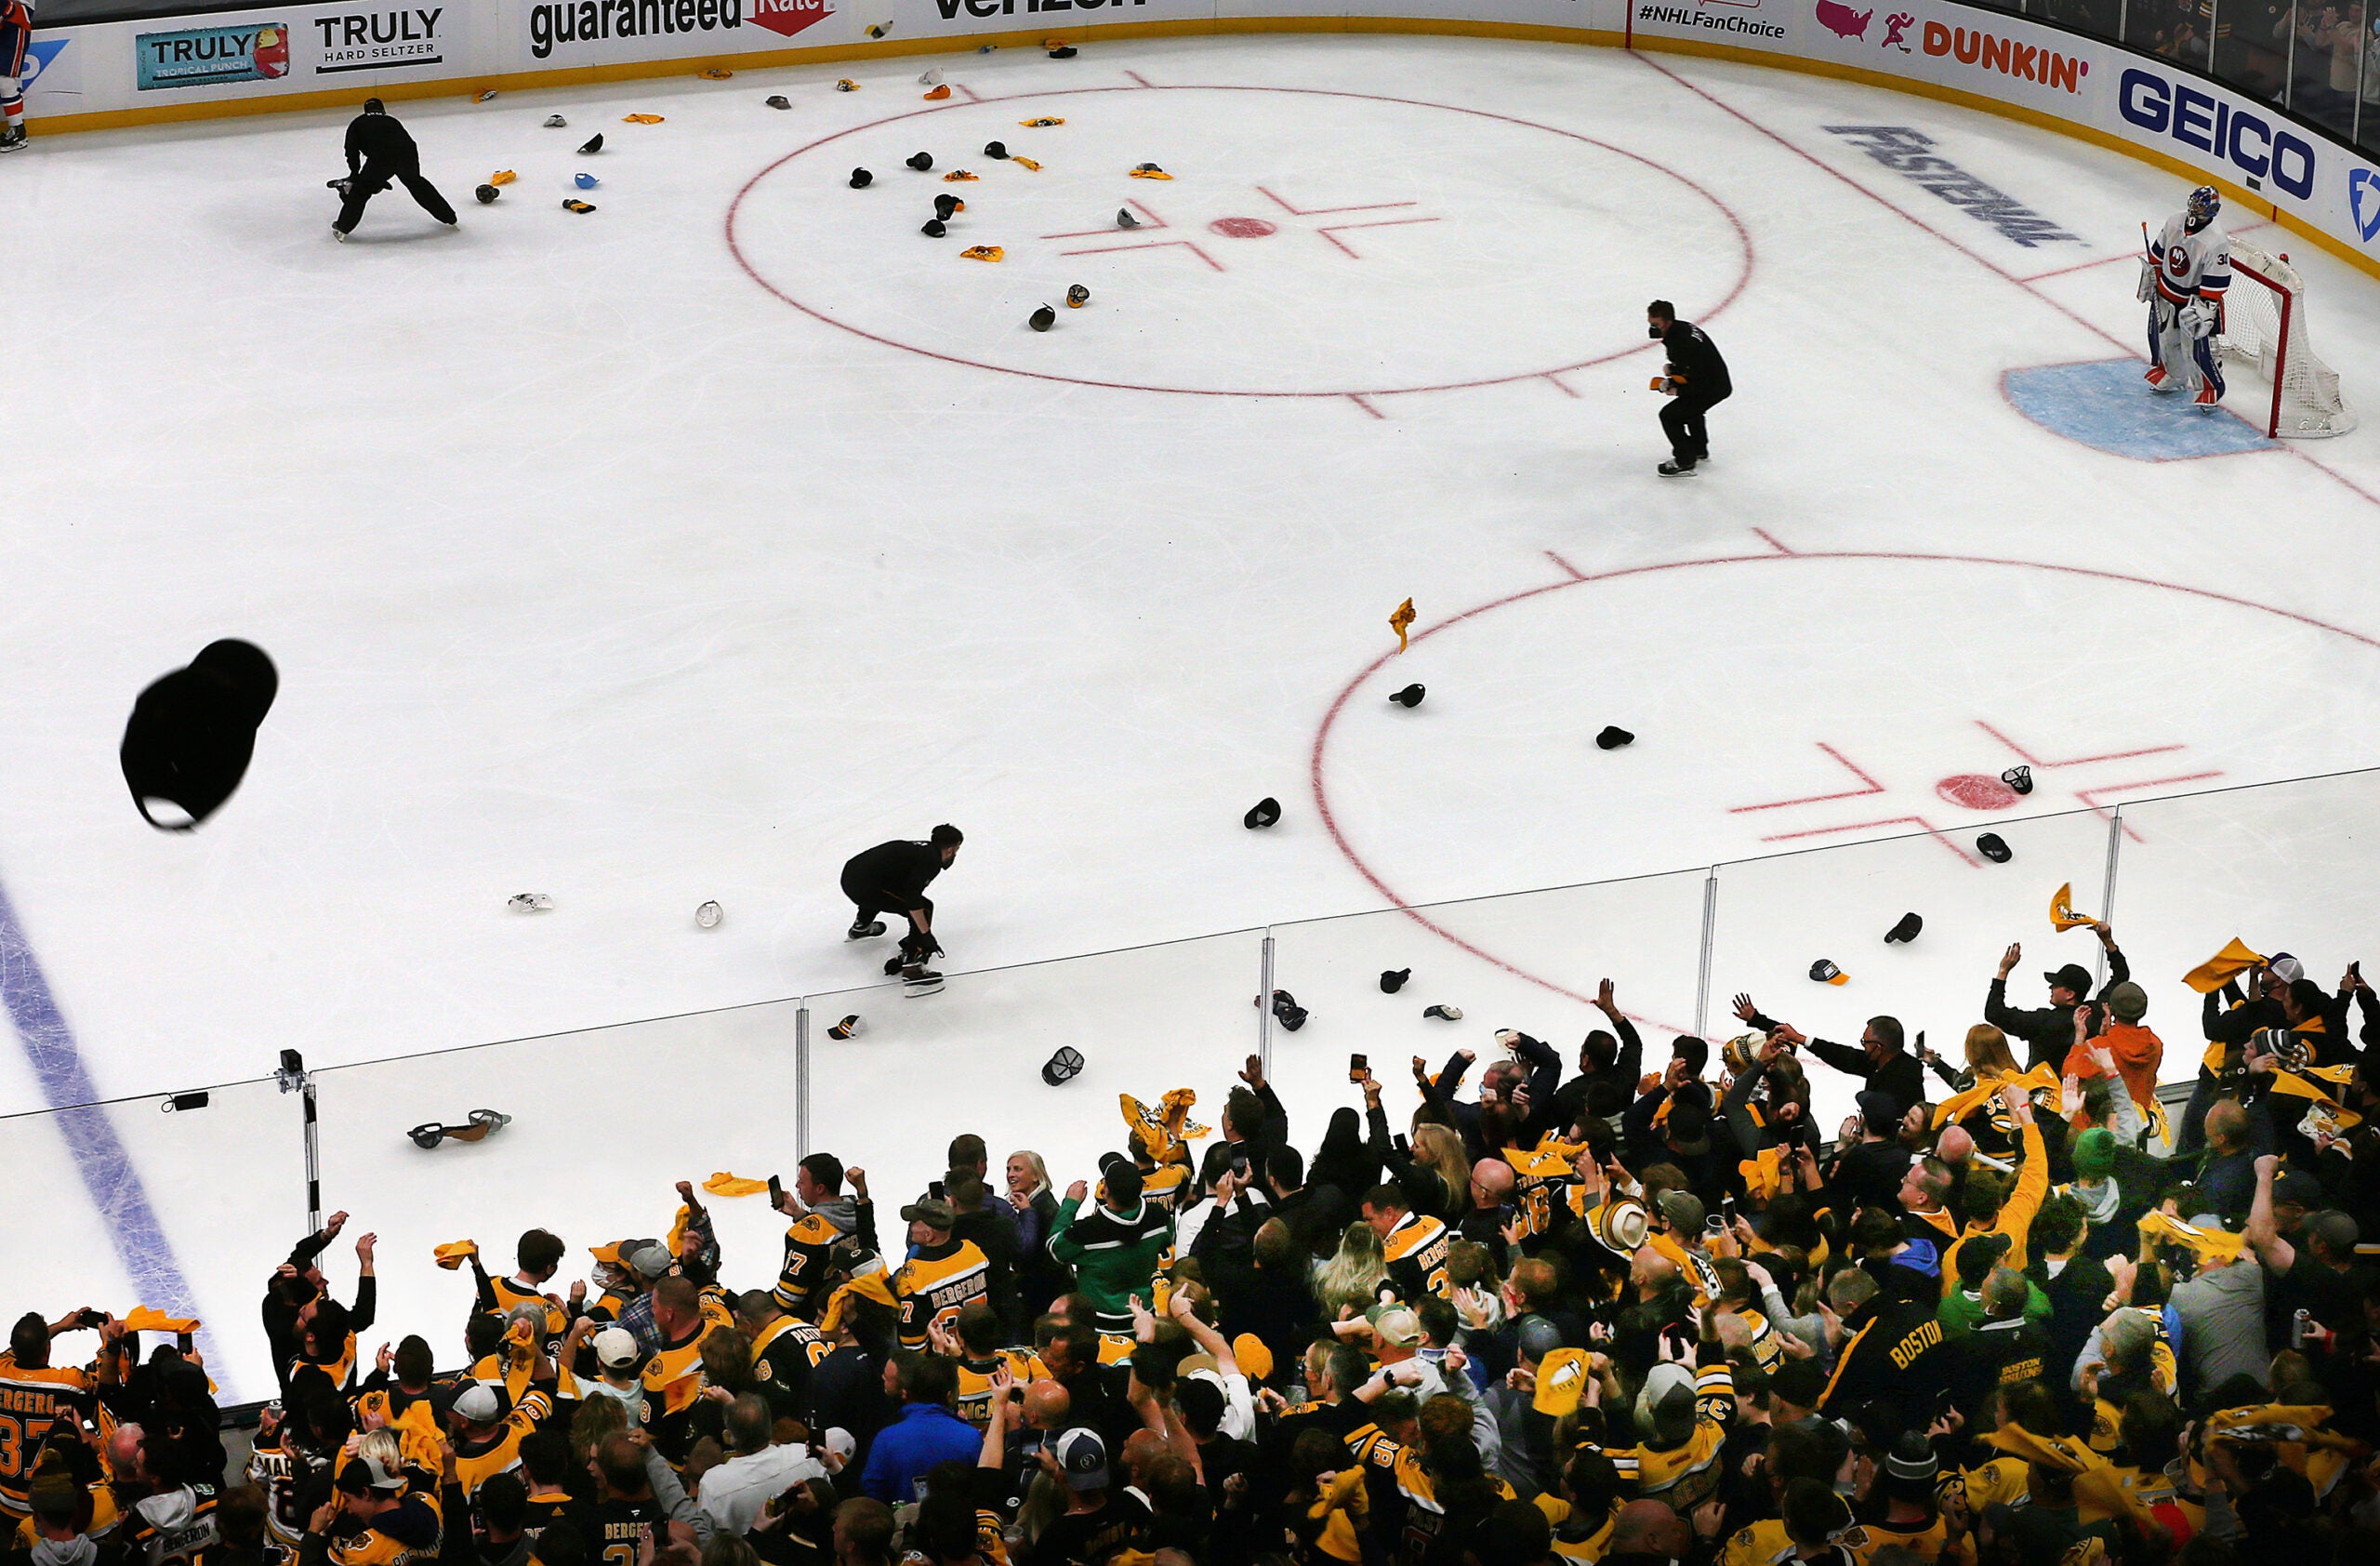 Remember When Bruins Fans Broke TD Garden Glass, Knocking Out Ref